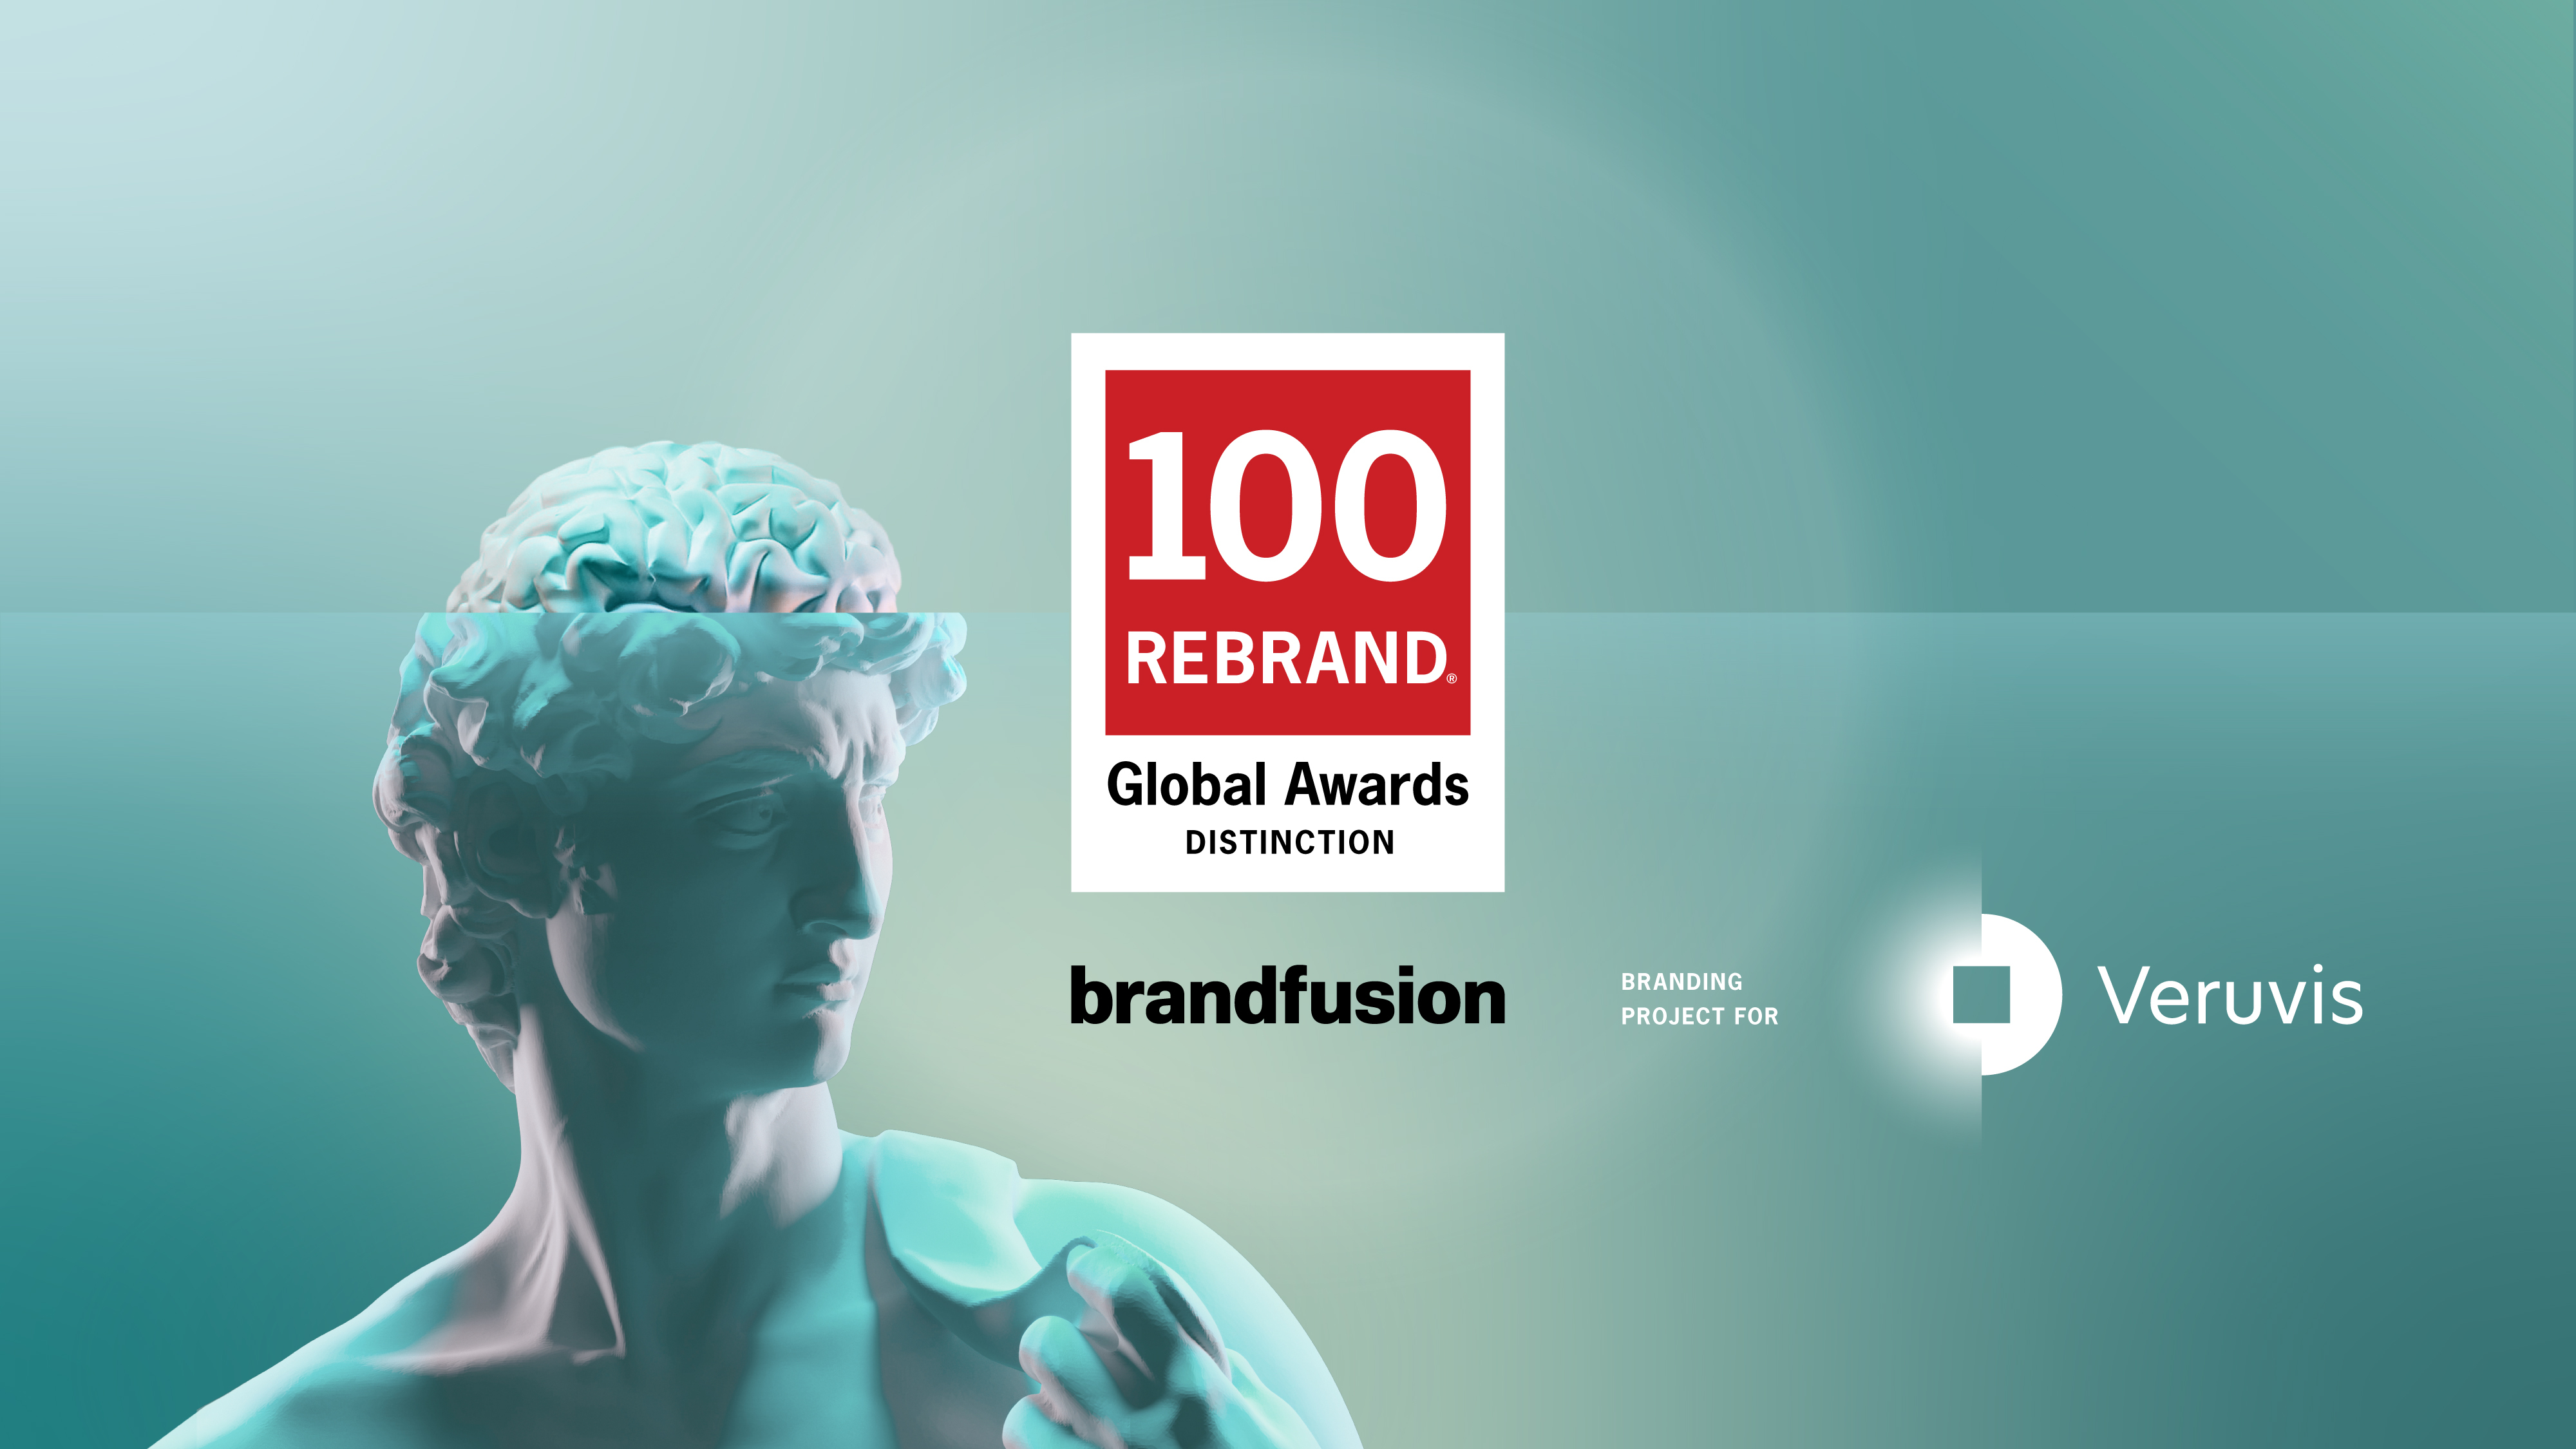 Brandfusion_Veruvis_REBRAND 100 Global Awards